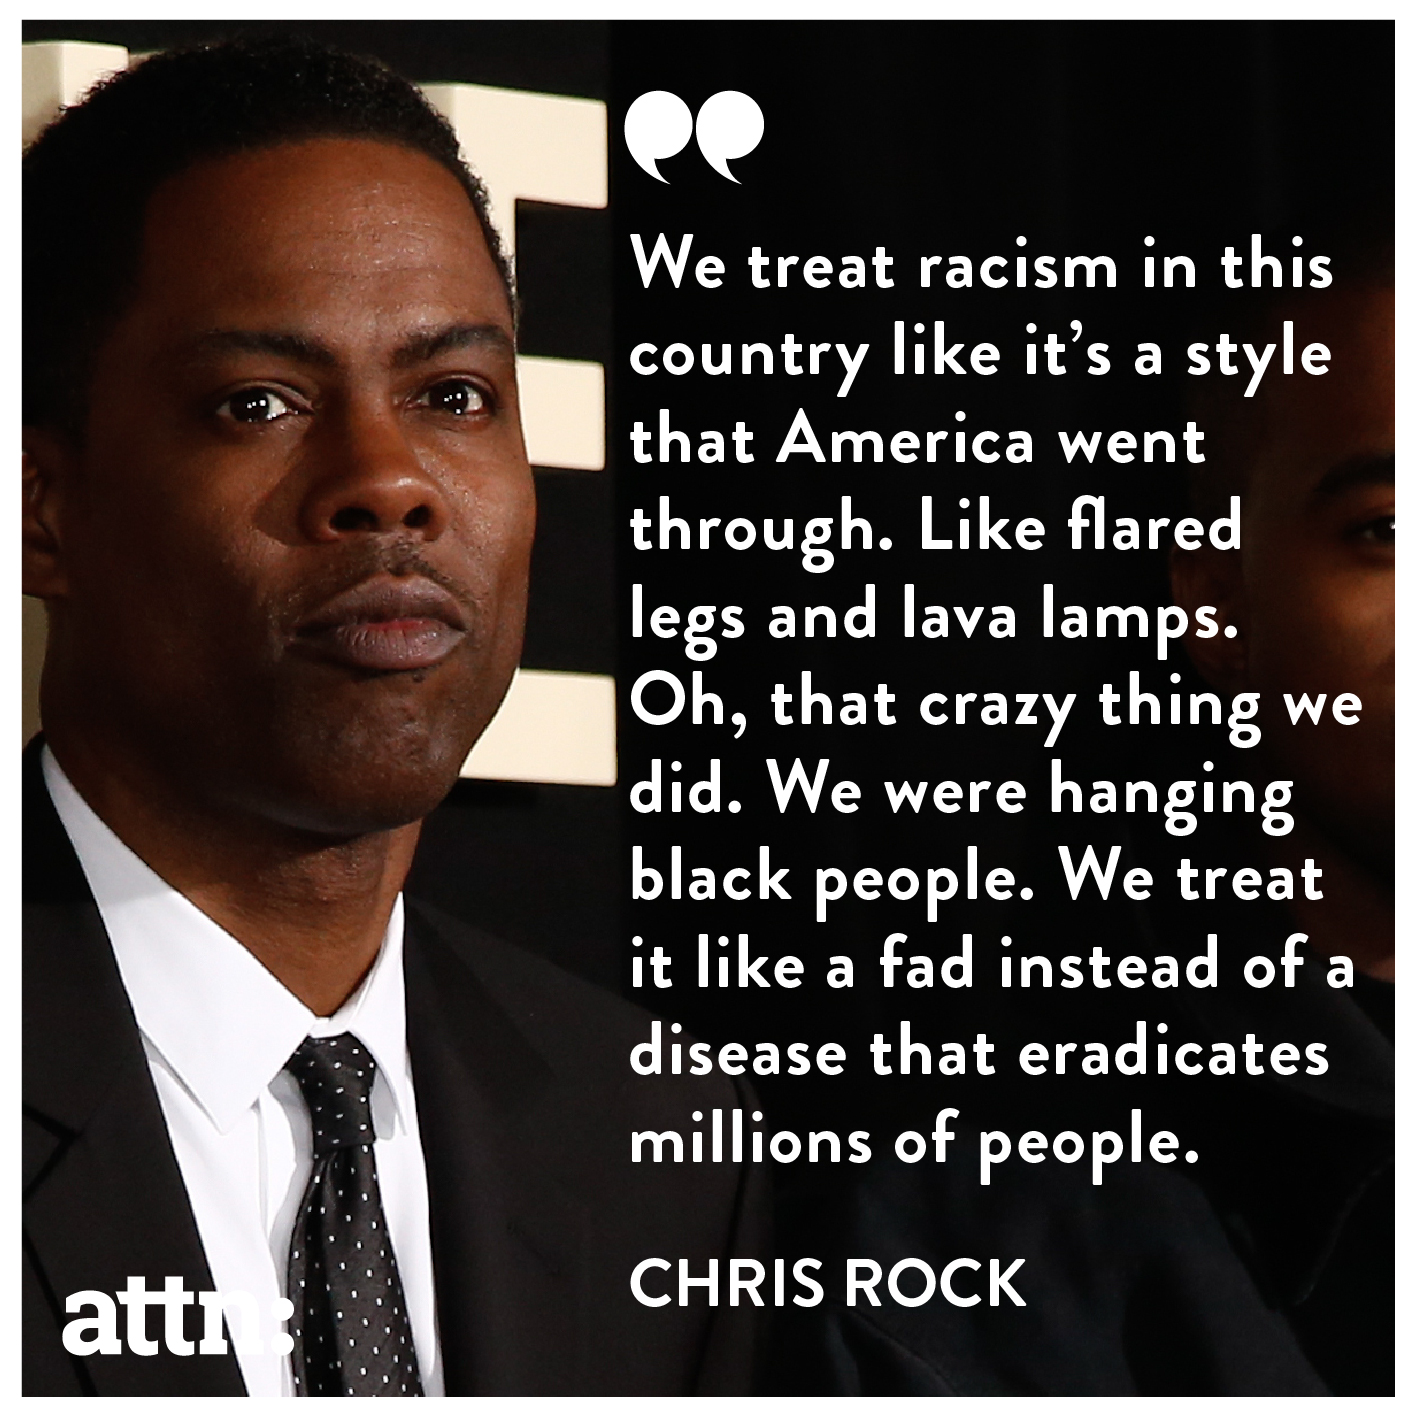 Chris Rock on racism